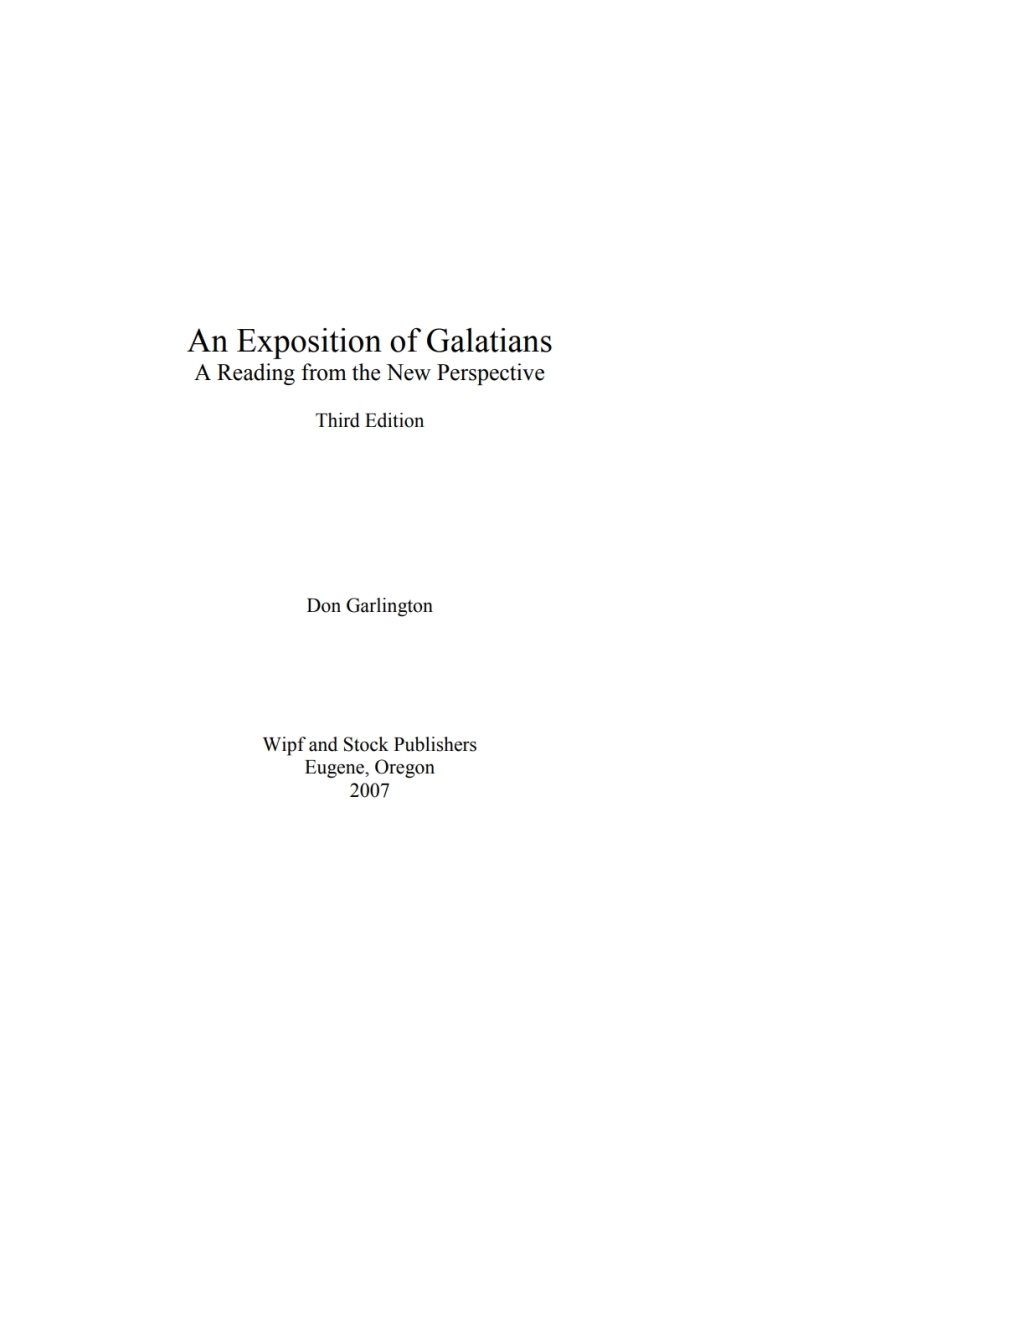 An Exposition of Galatians  Third Edition (eBook) - Don Garlington,